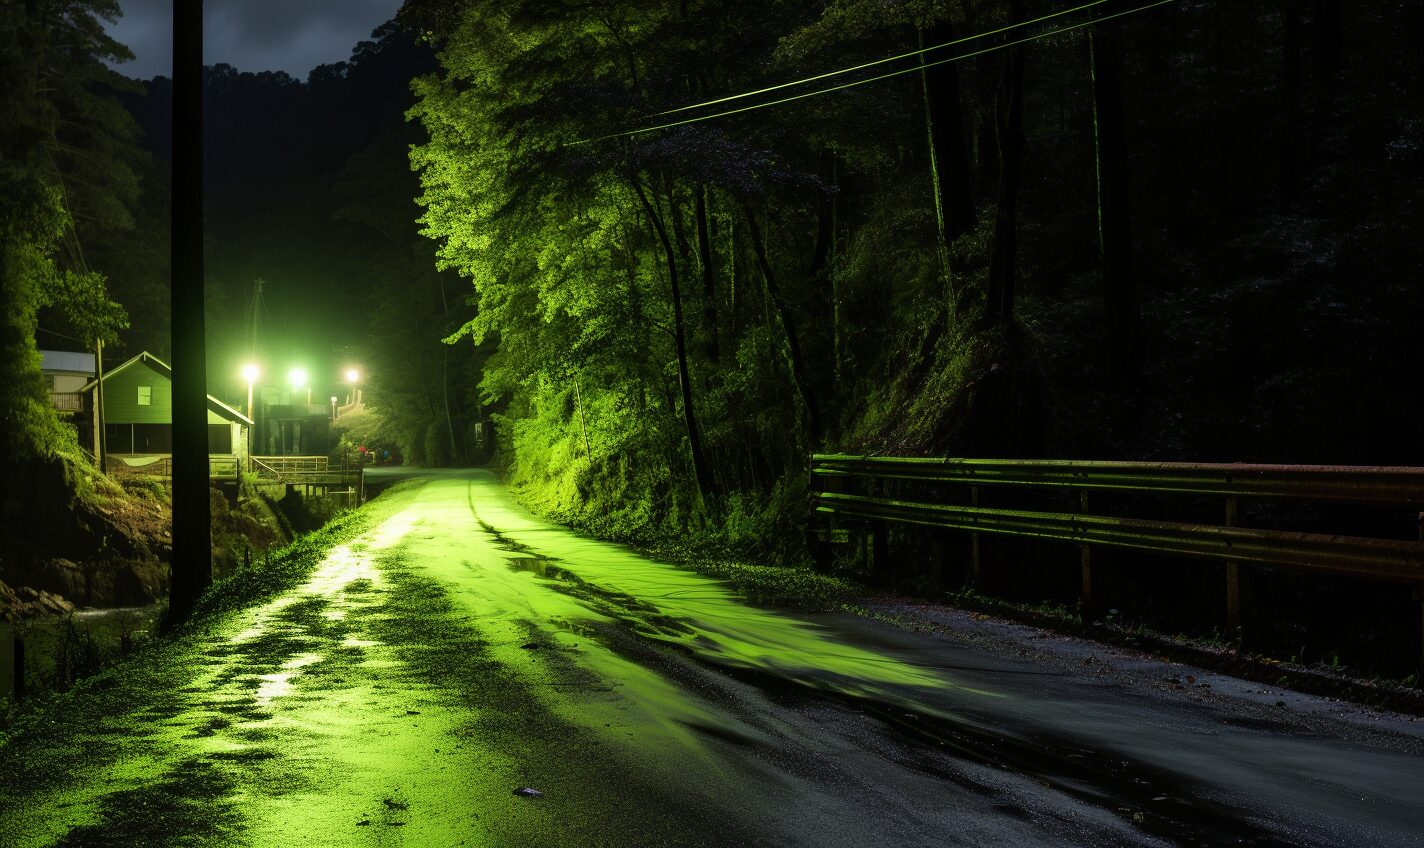 winston-salem, north carolina in black and neon green glow